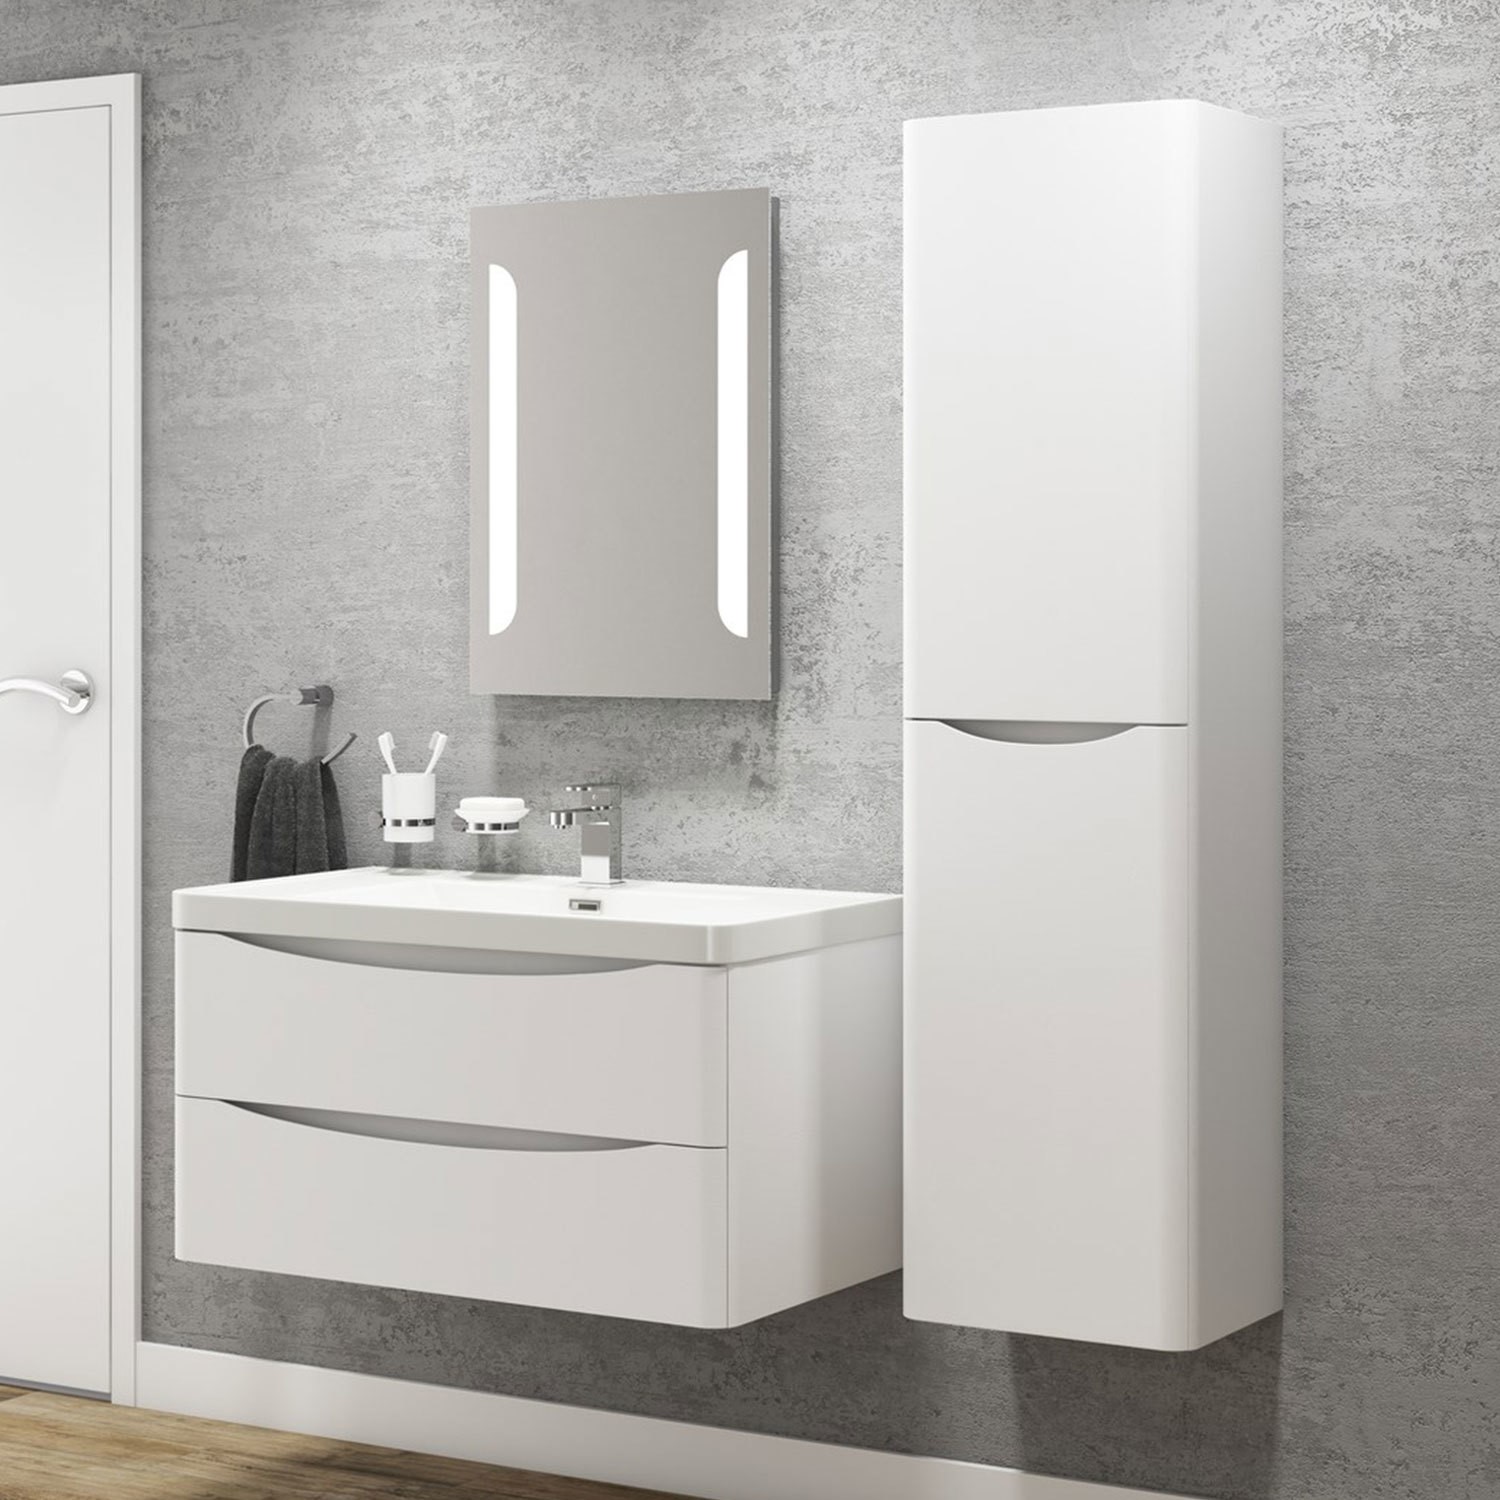 Modern White Wall Hung Bathroom Vanity Unit Basin Furniture123